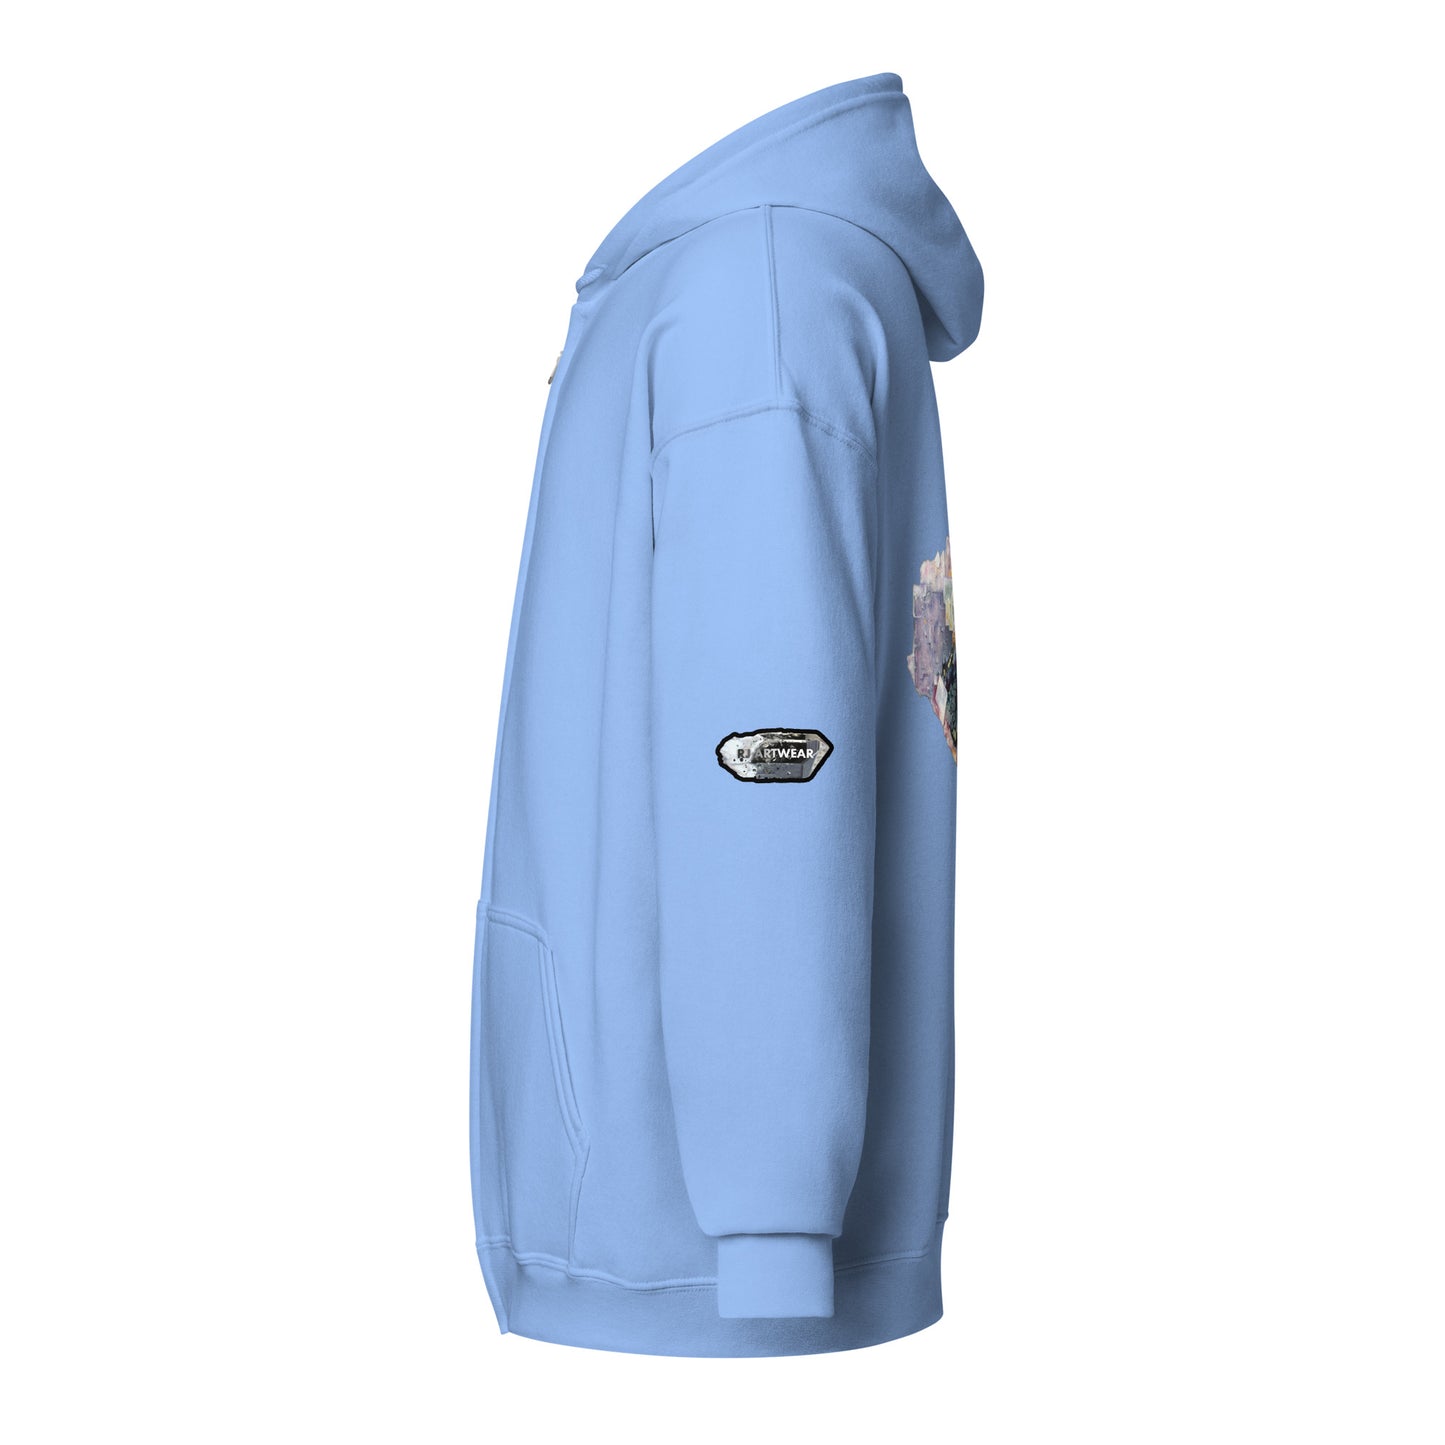 Fluorite Cluster - Unisex heavy blend zip hoodie